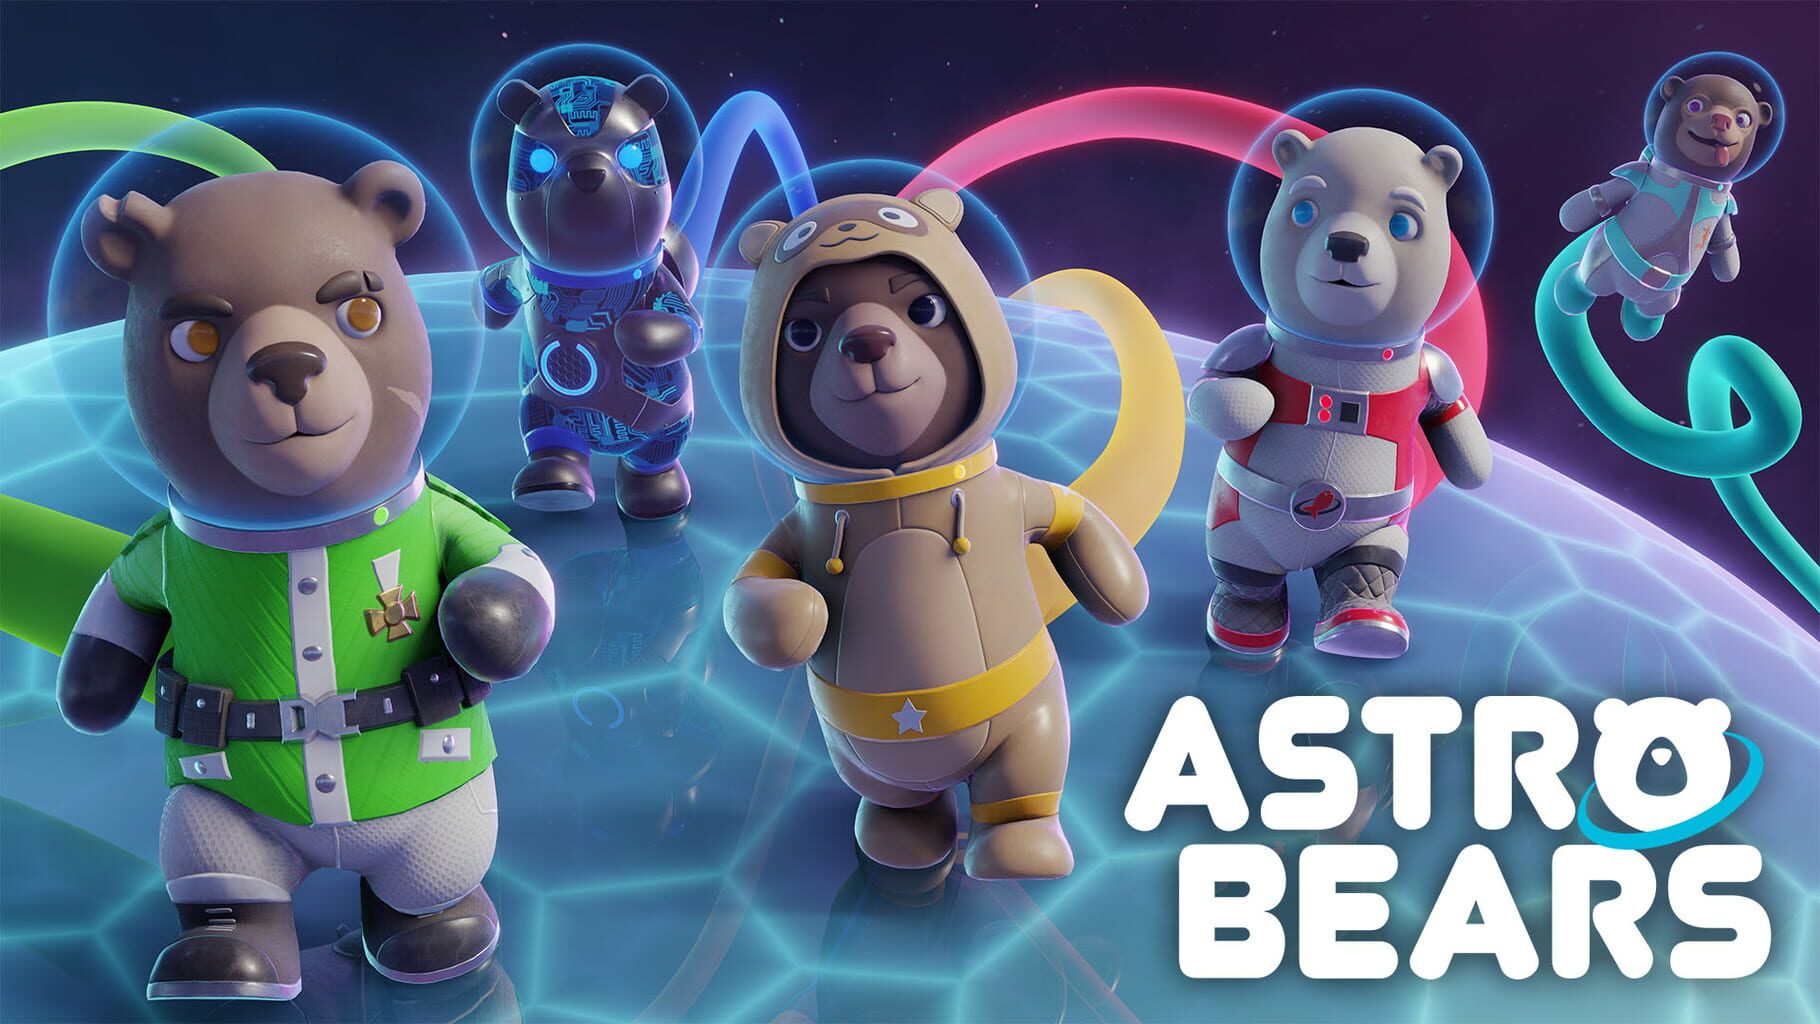 Astro Bears artwork